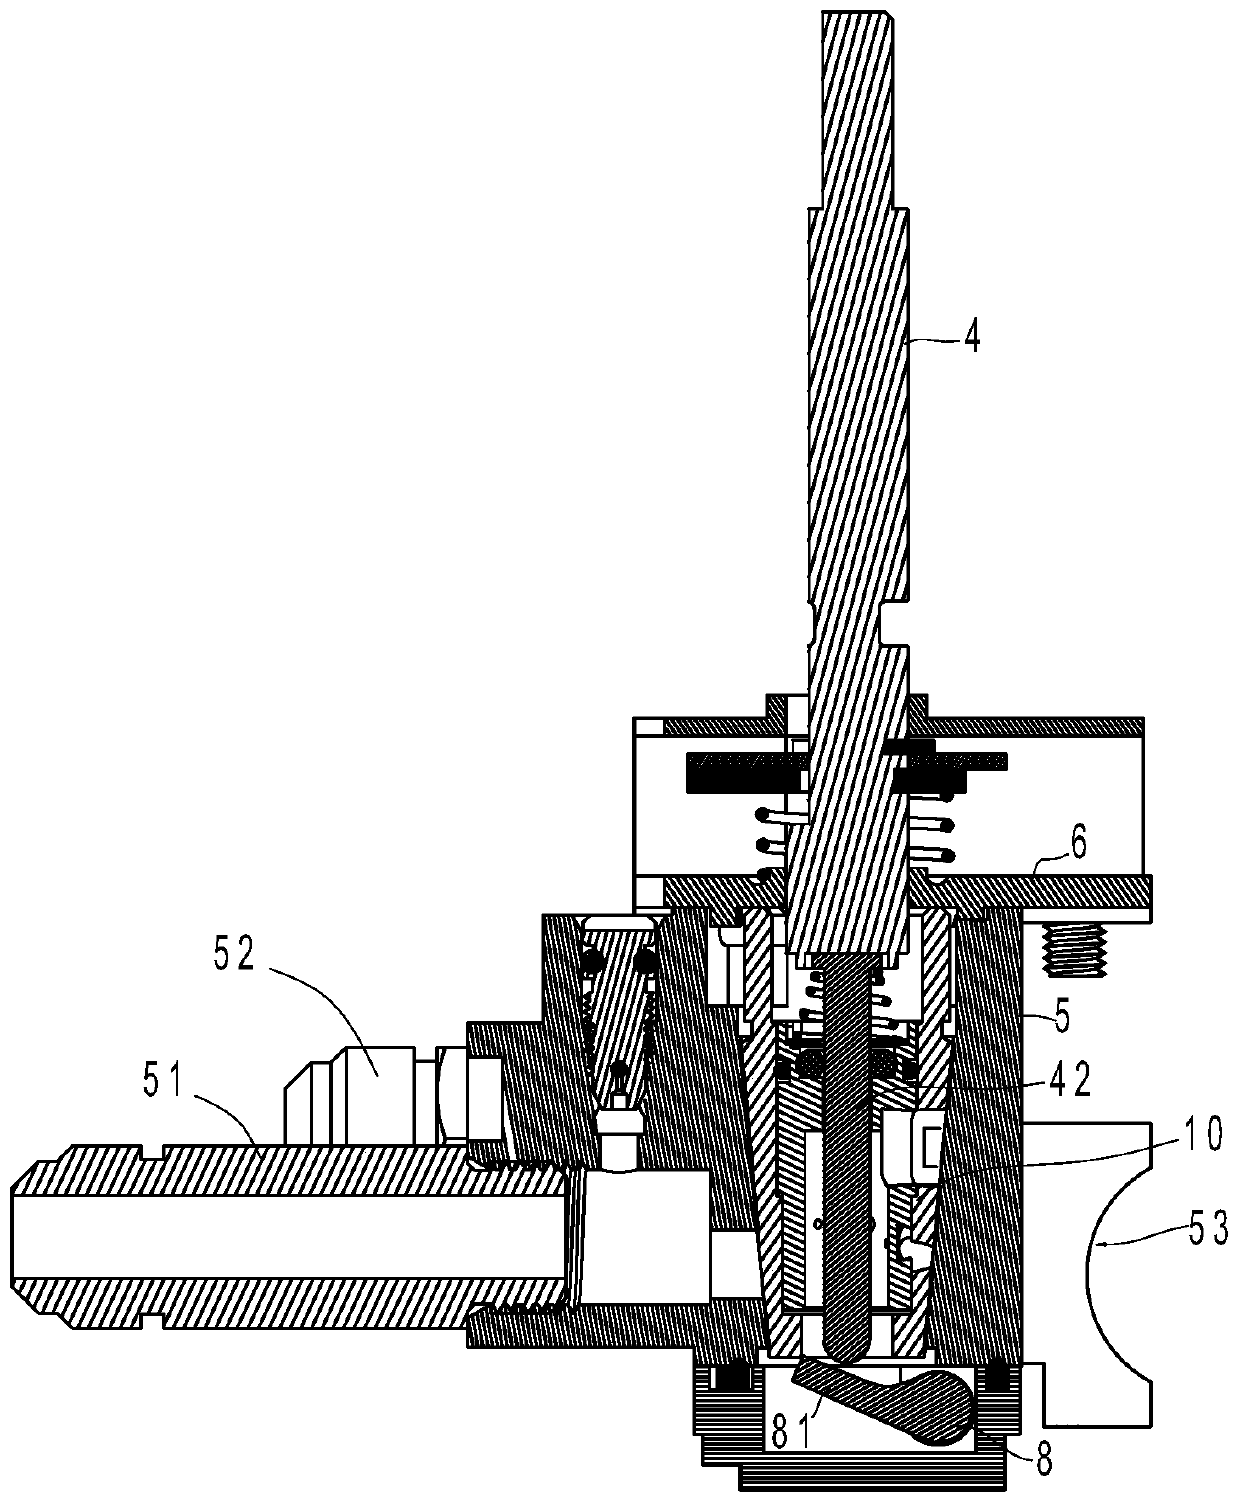 Gas regulating valve core structure